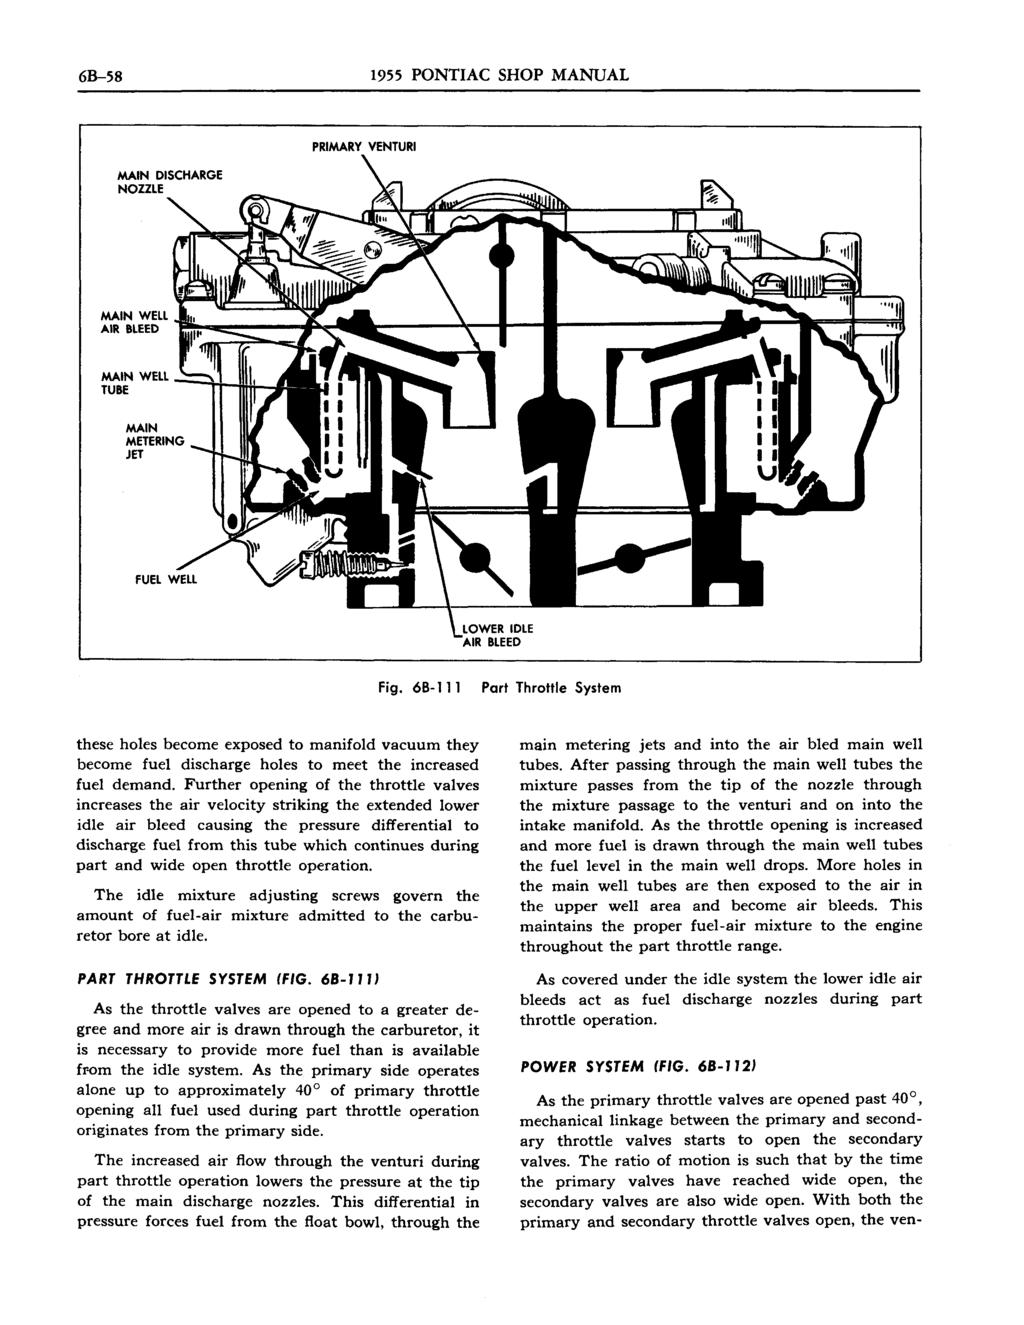 6B-58 1955 PONTIAC SHOP MANUAL MAIN DISCHARGE NOZZLE PRIMARY VENTURI MAIN WELL AIR BLEED l=ii~_!""----"'~" MAIN WELL TUBE ----Tr~~ MAIN METERING JET Fig.